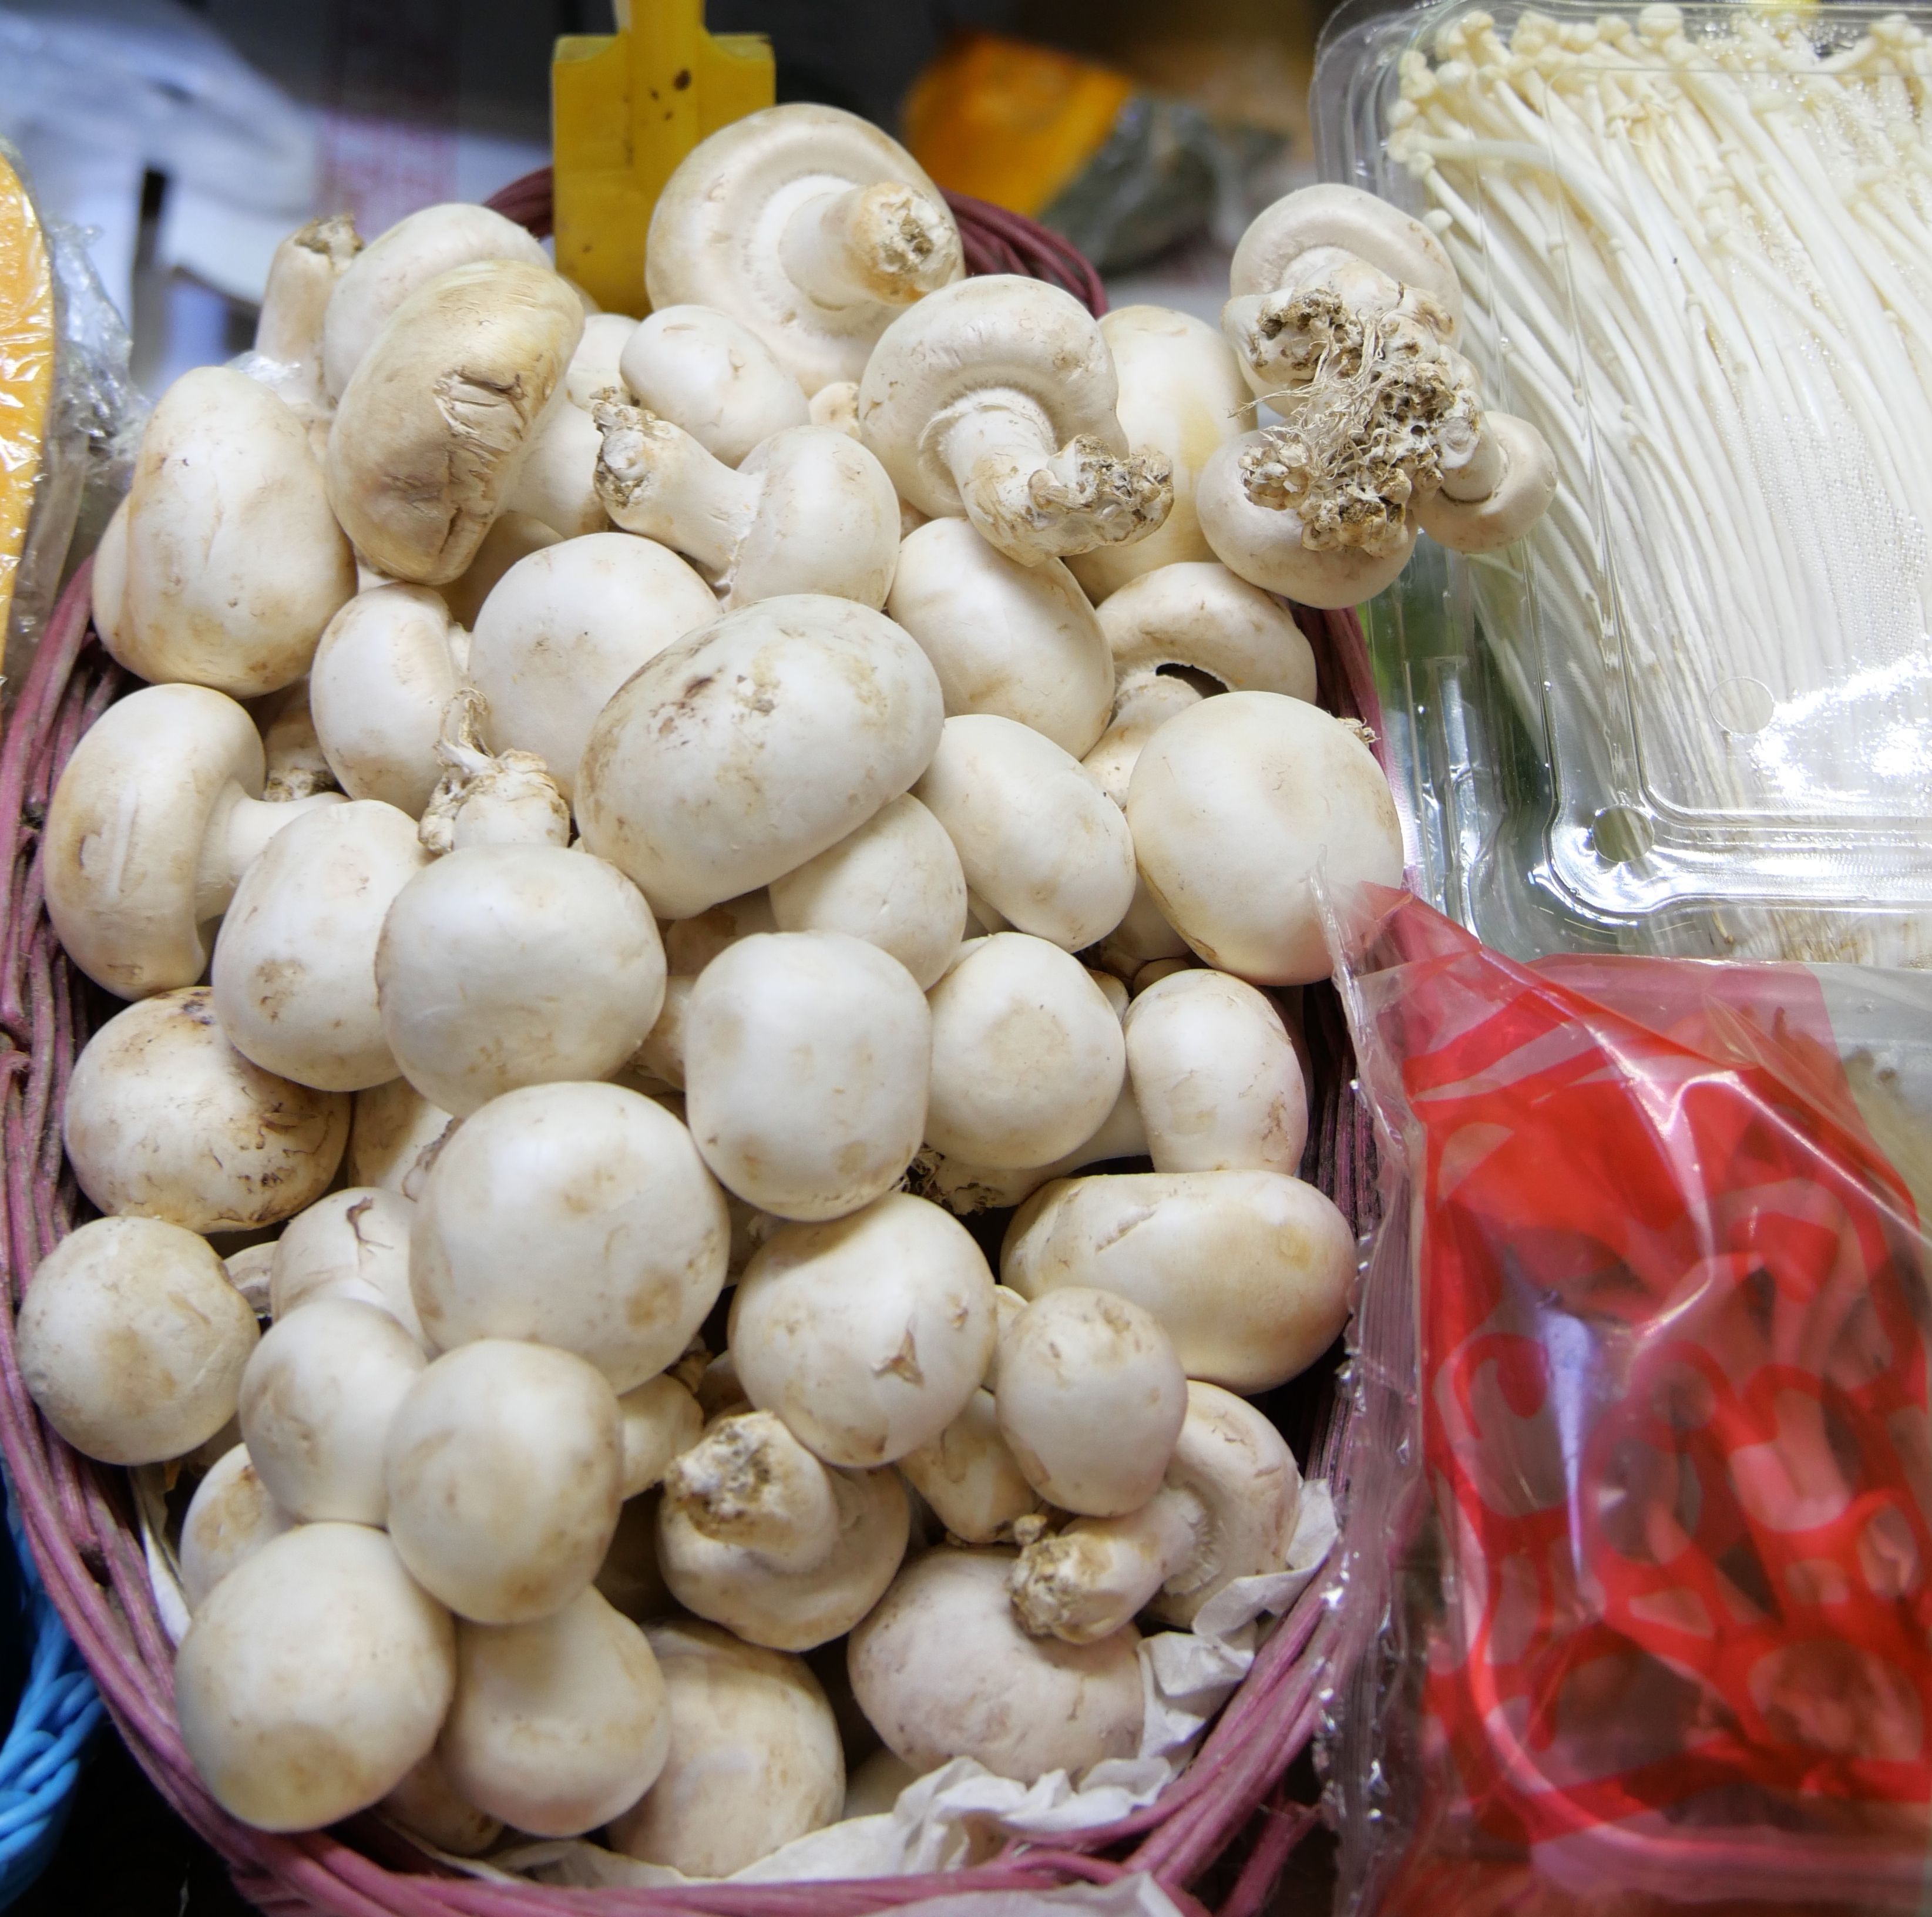 White fuzz on mushrooms - safe to eat?